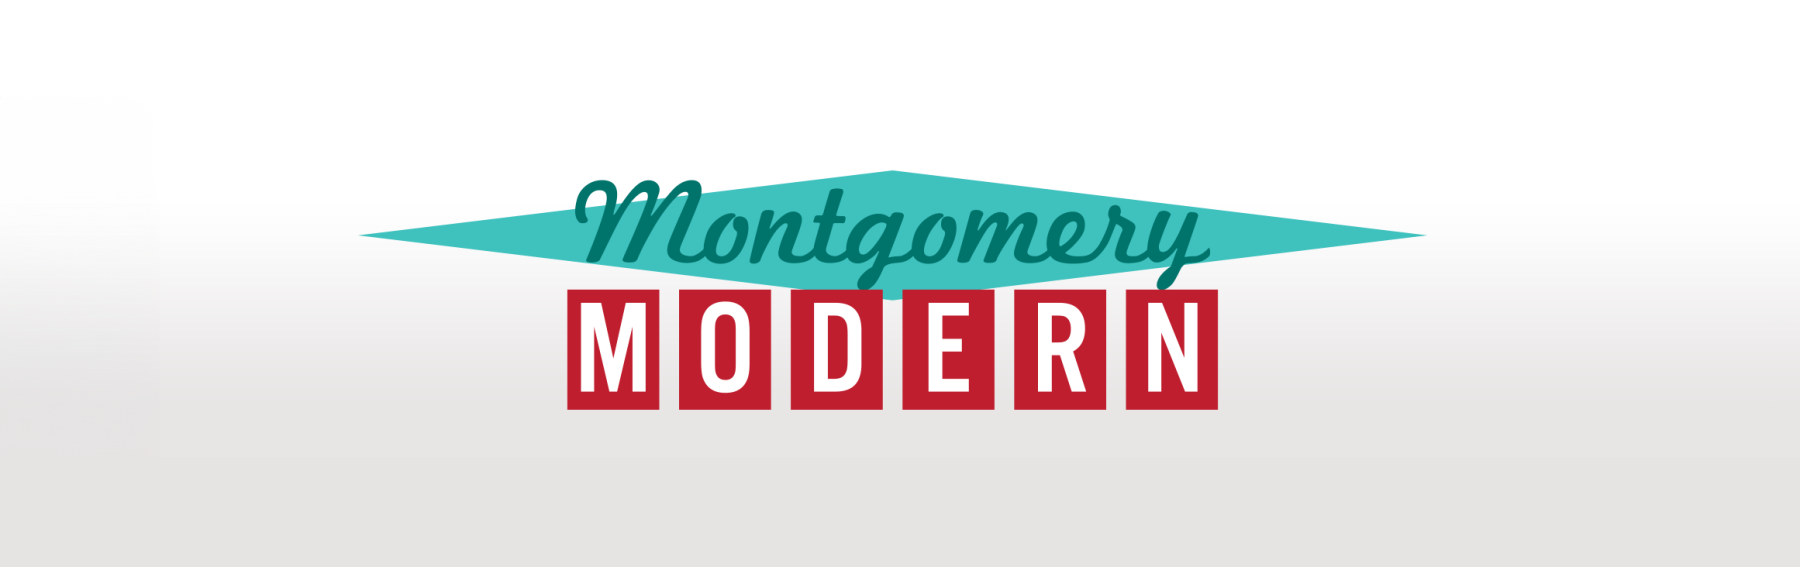 Montgomery Modern logo